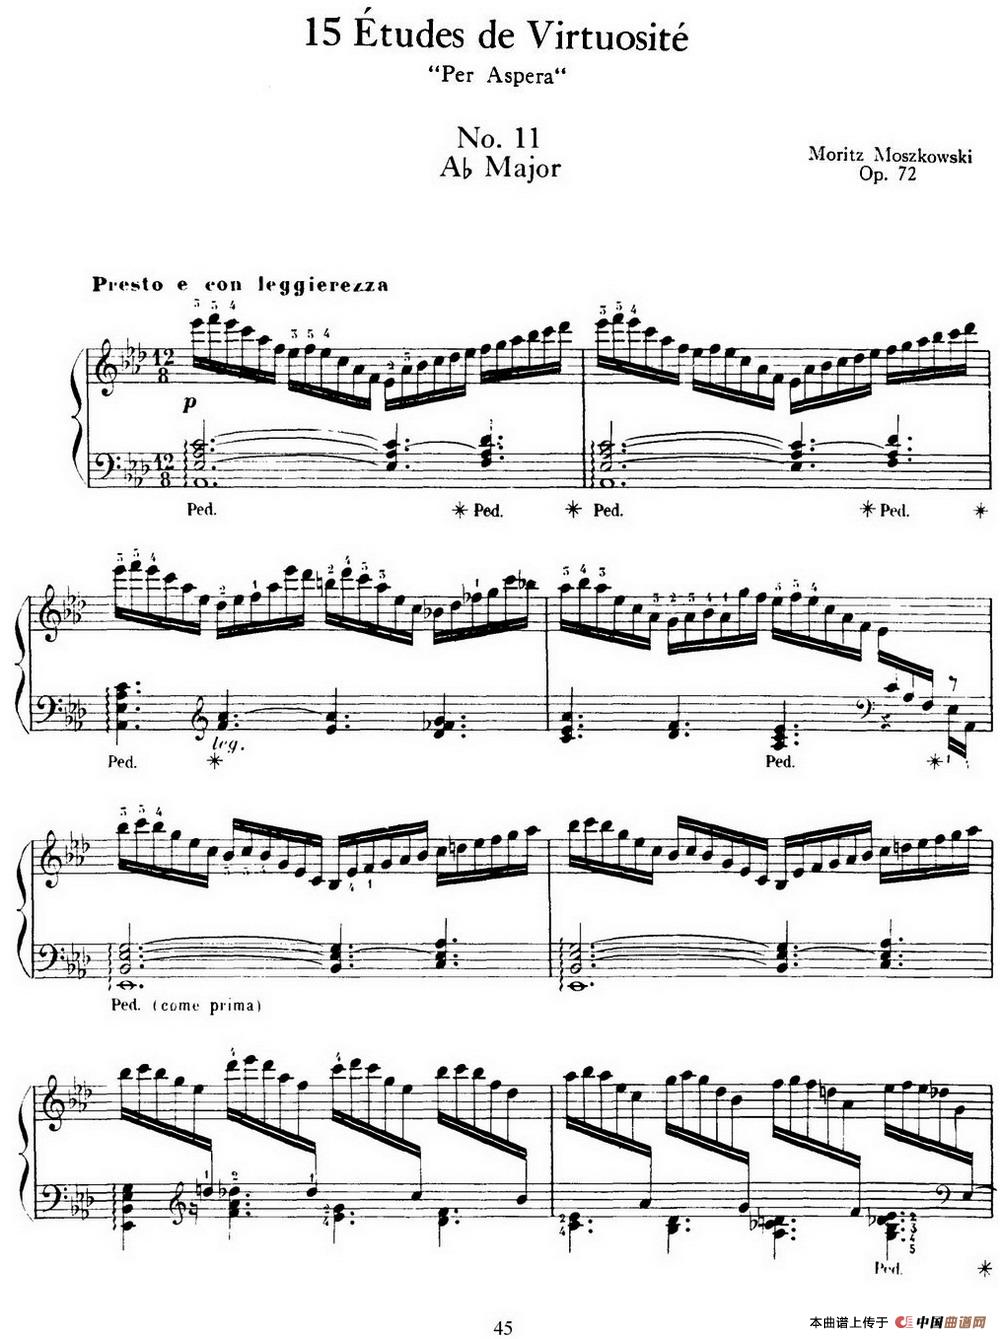 15 Etudes de Virtuosité Op.72 No.11（十五首钢琴练习曲之十一）(1)_045-.jpg